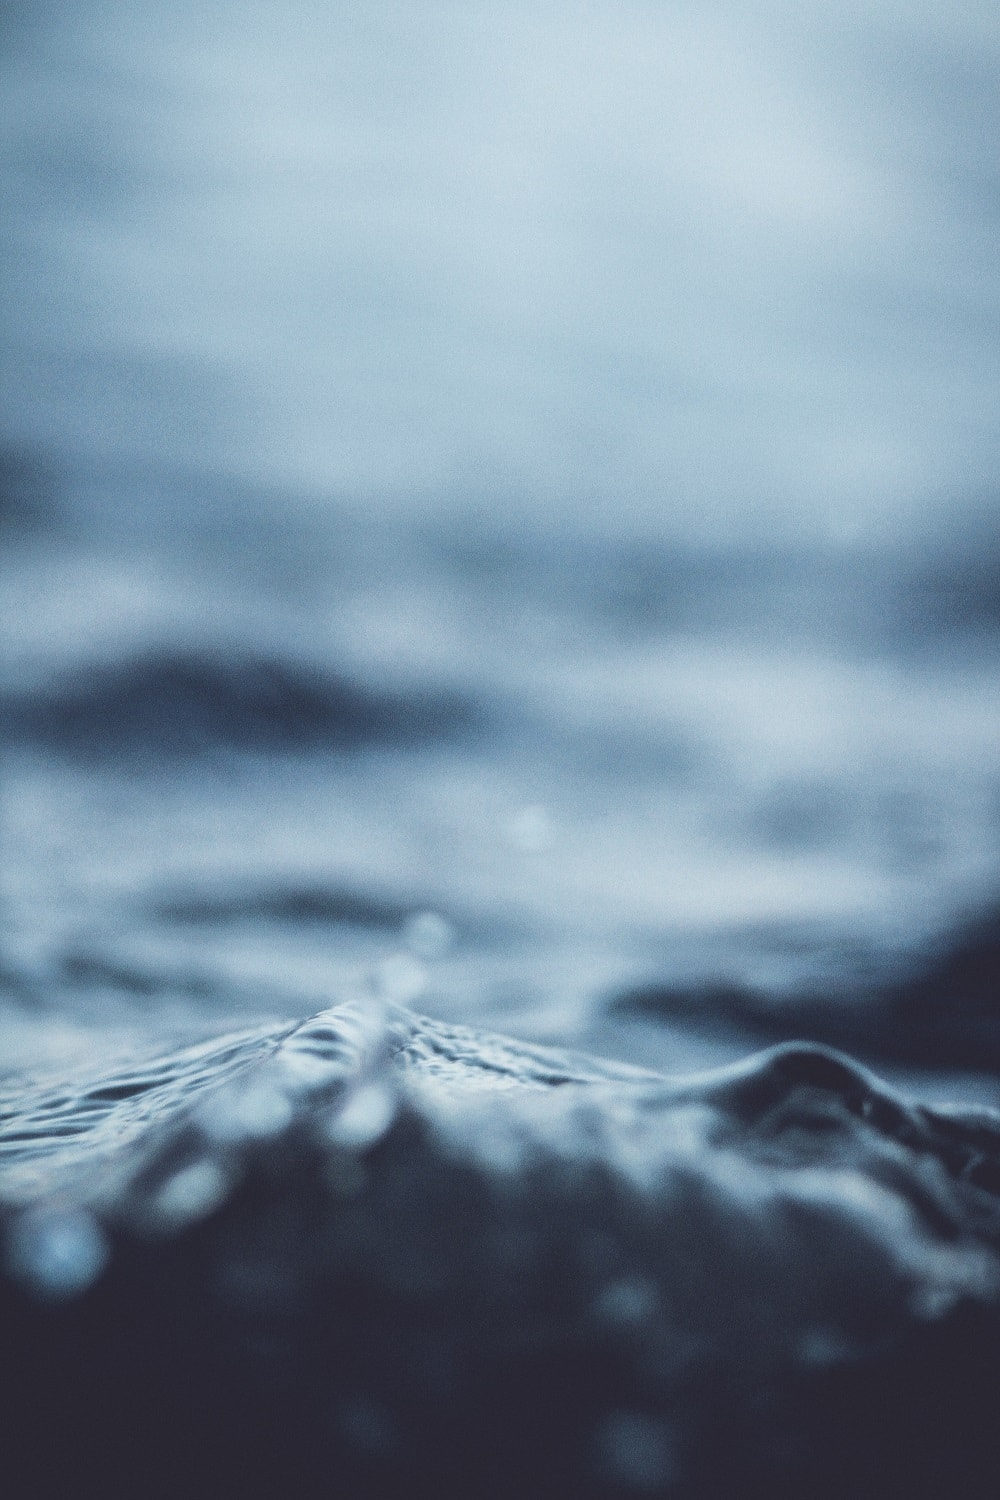 Chasing the Water by Photographer Samara Doole